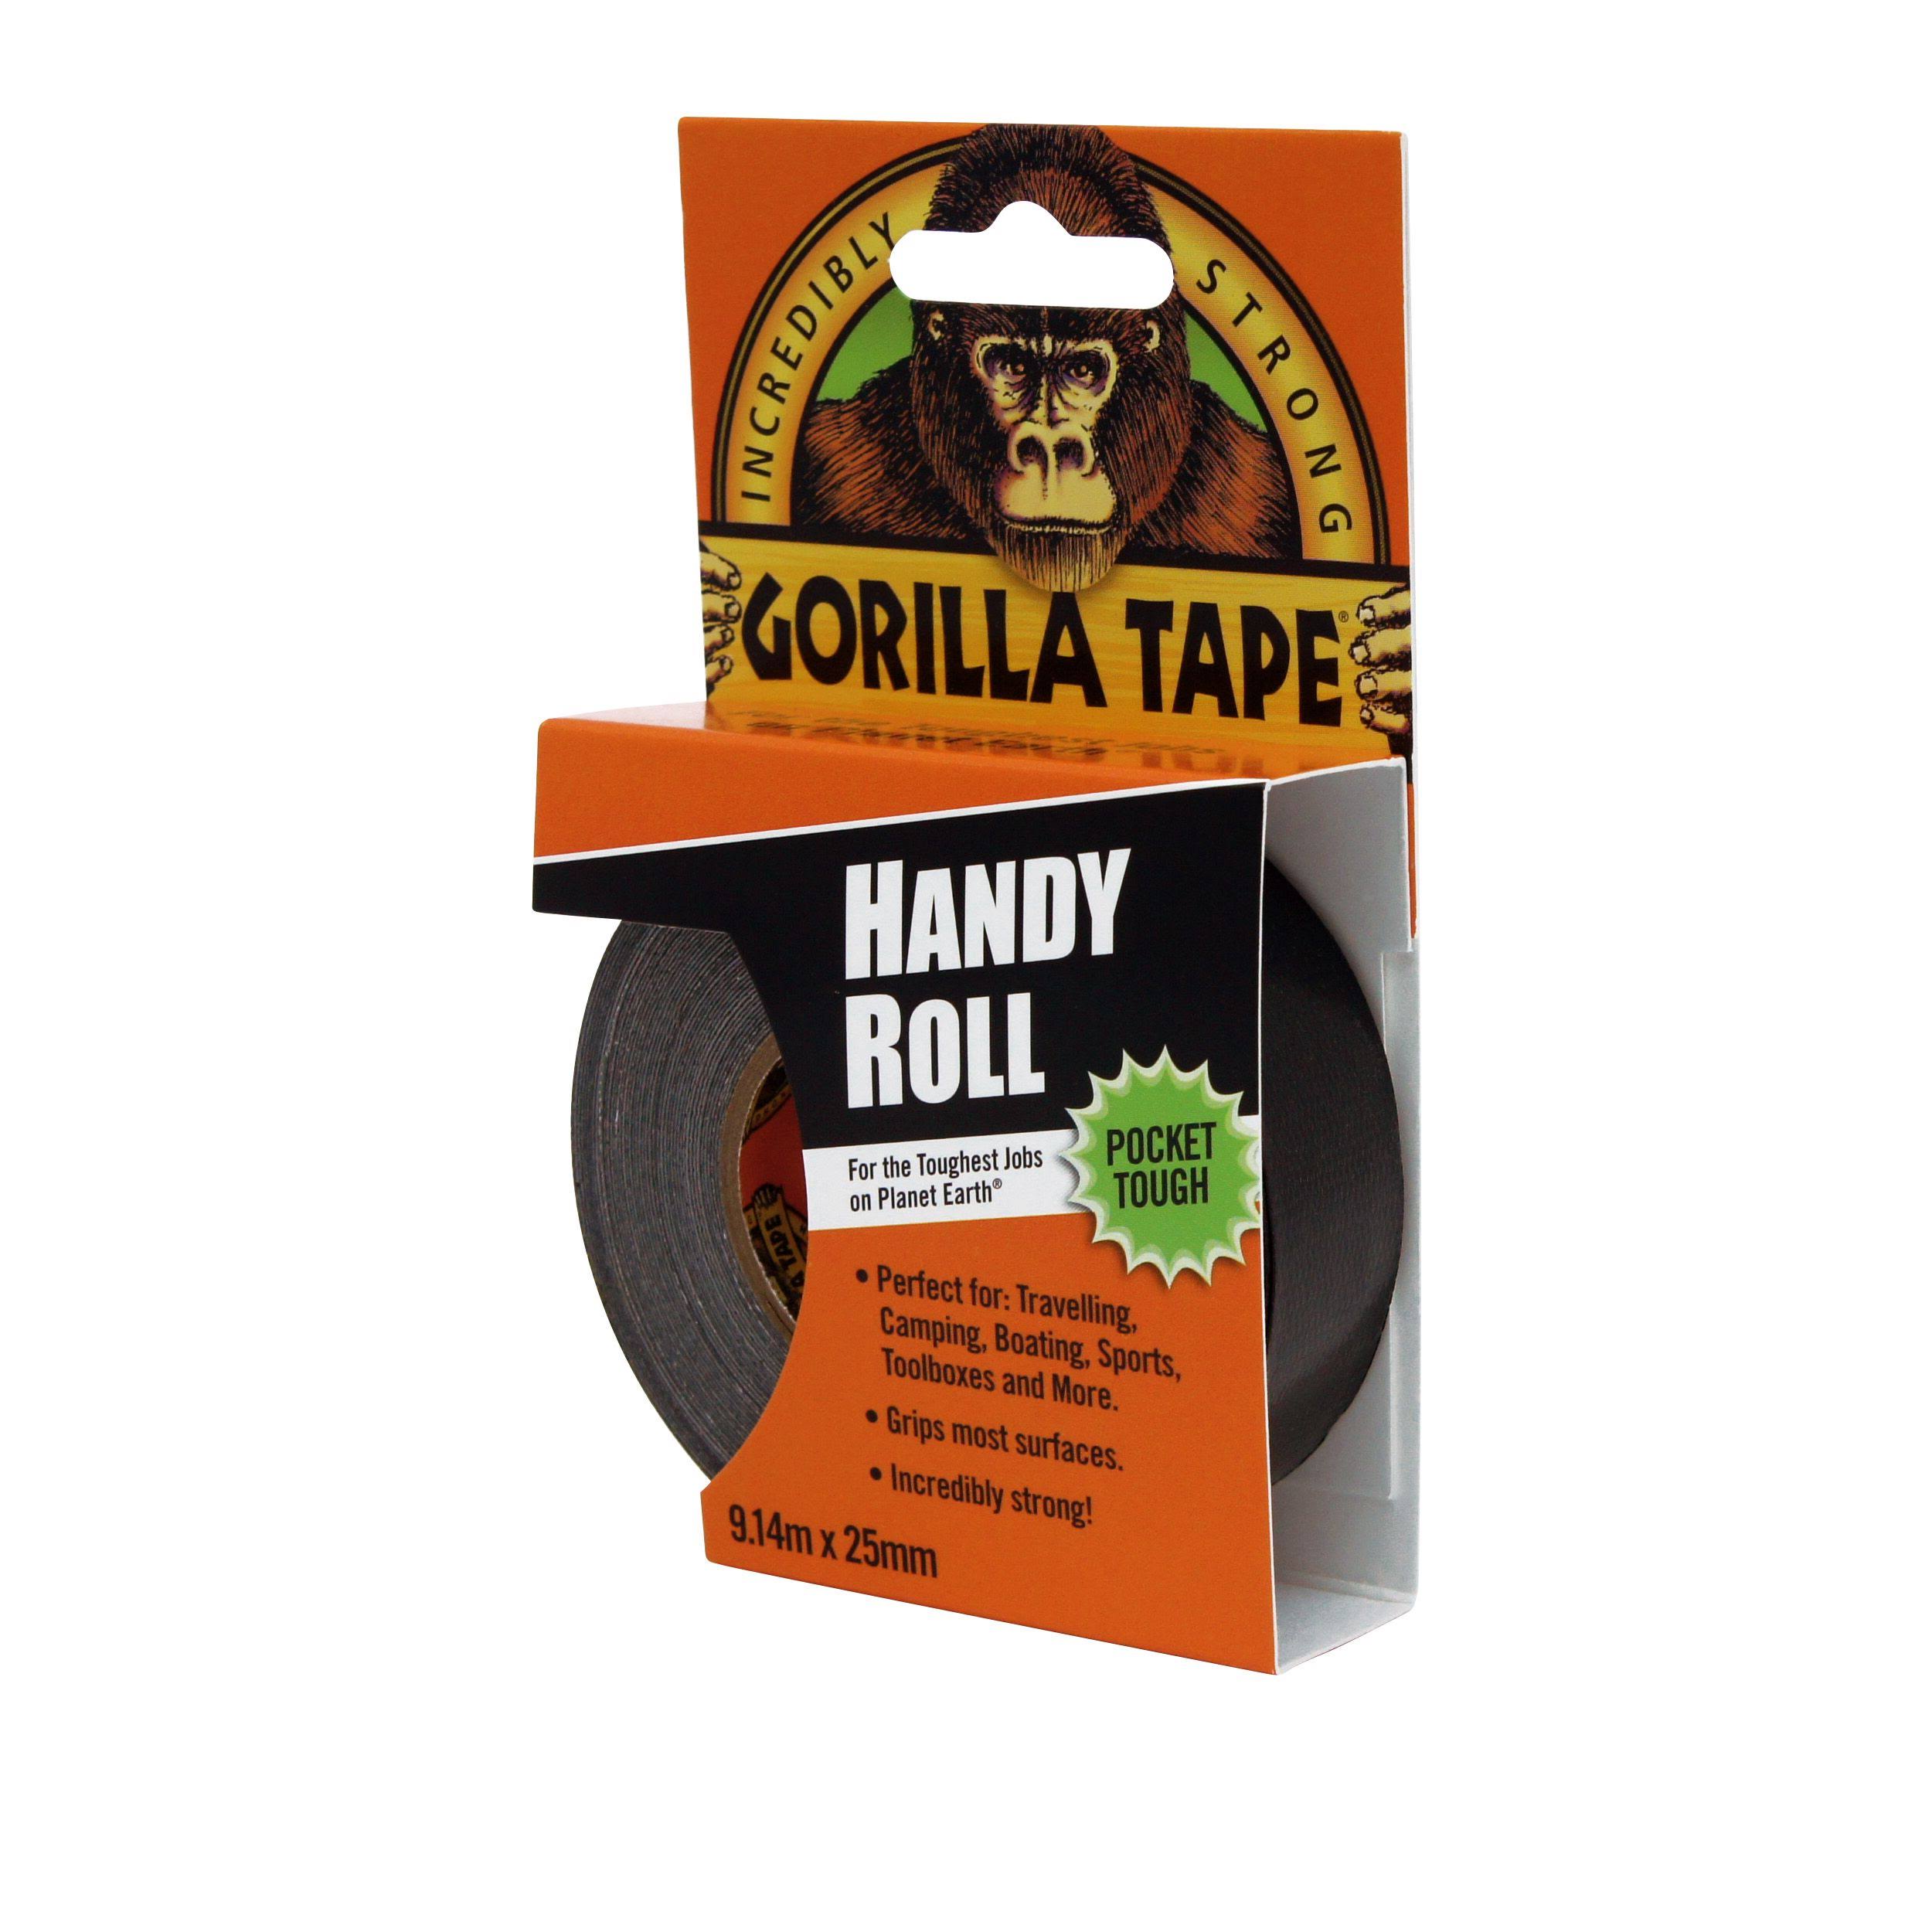 Gorilla Tape To-Go